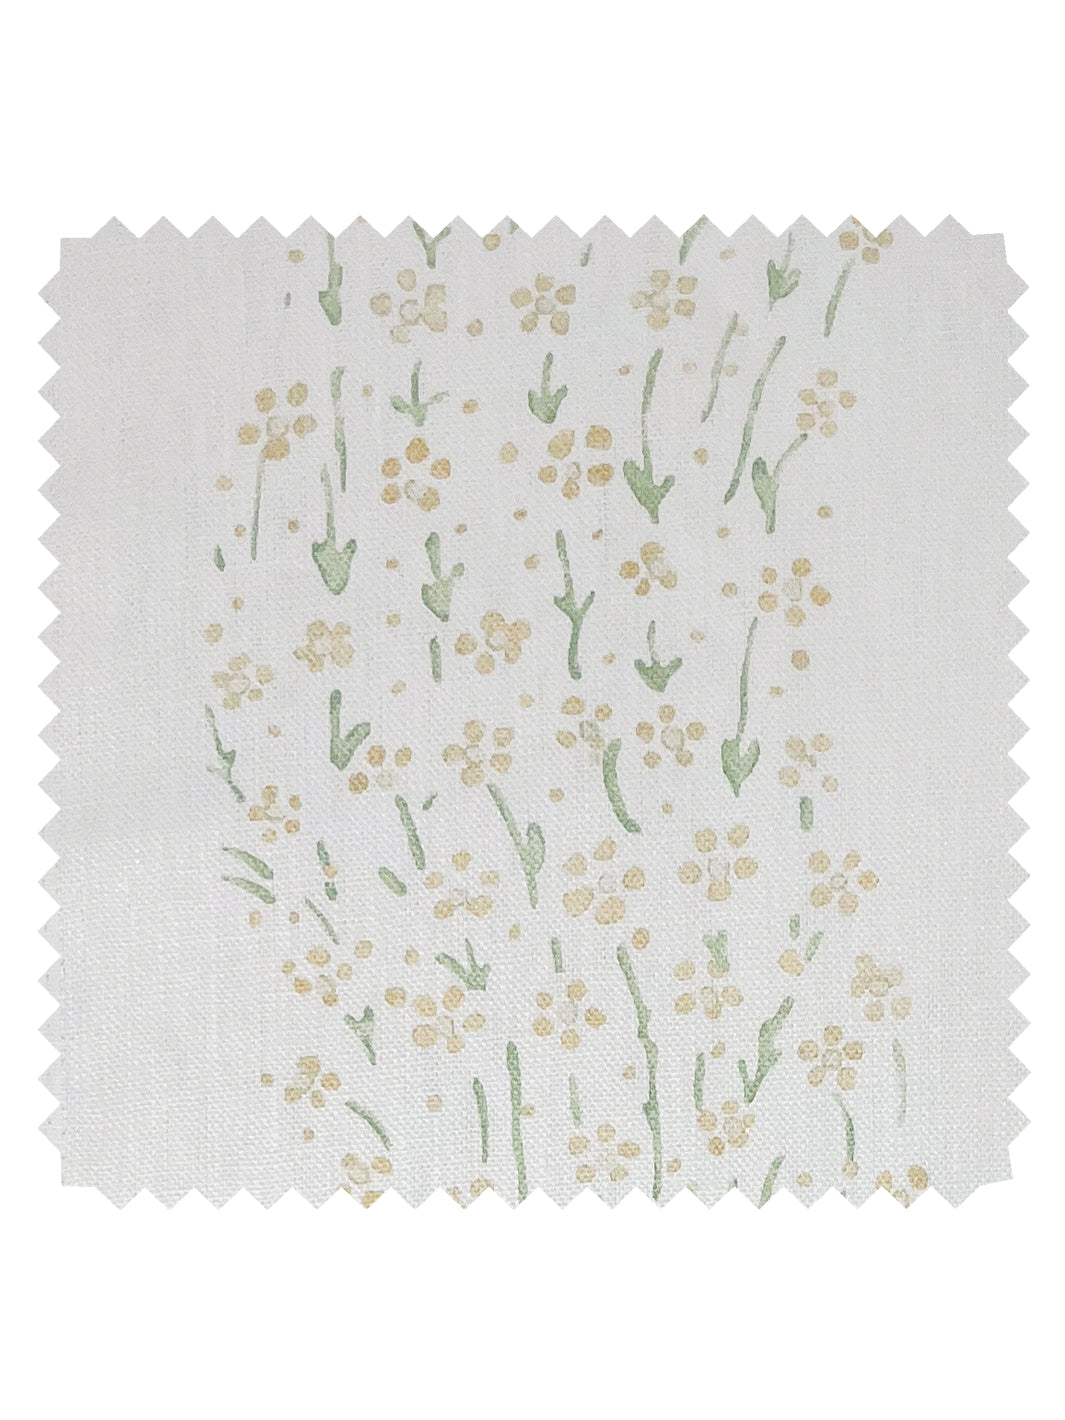 &#39;Hillhouse Floral Disty Wave&#39; Linen Fabric - Gold Green